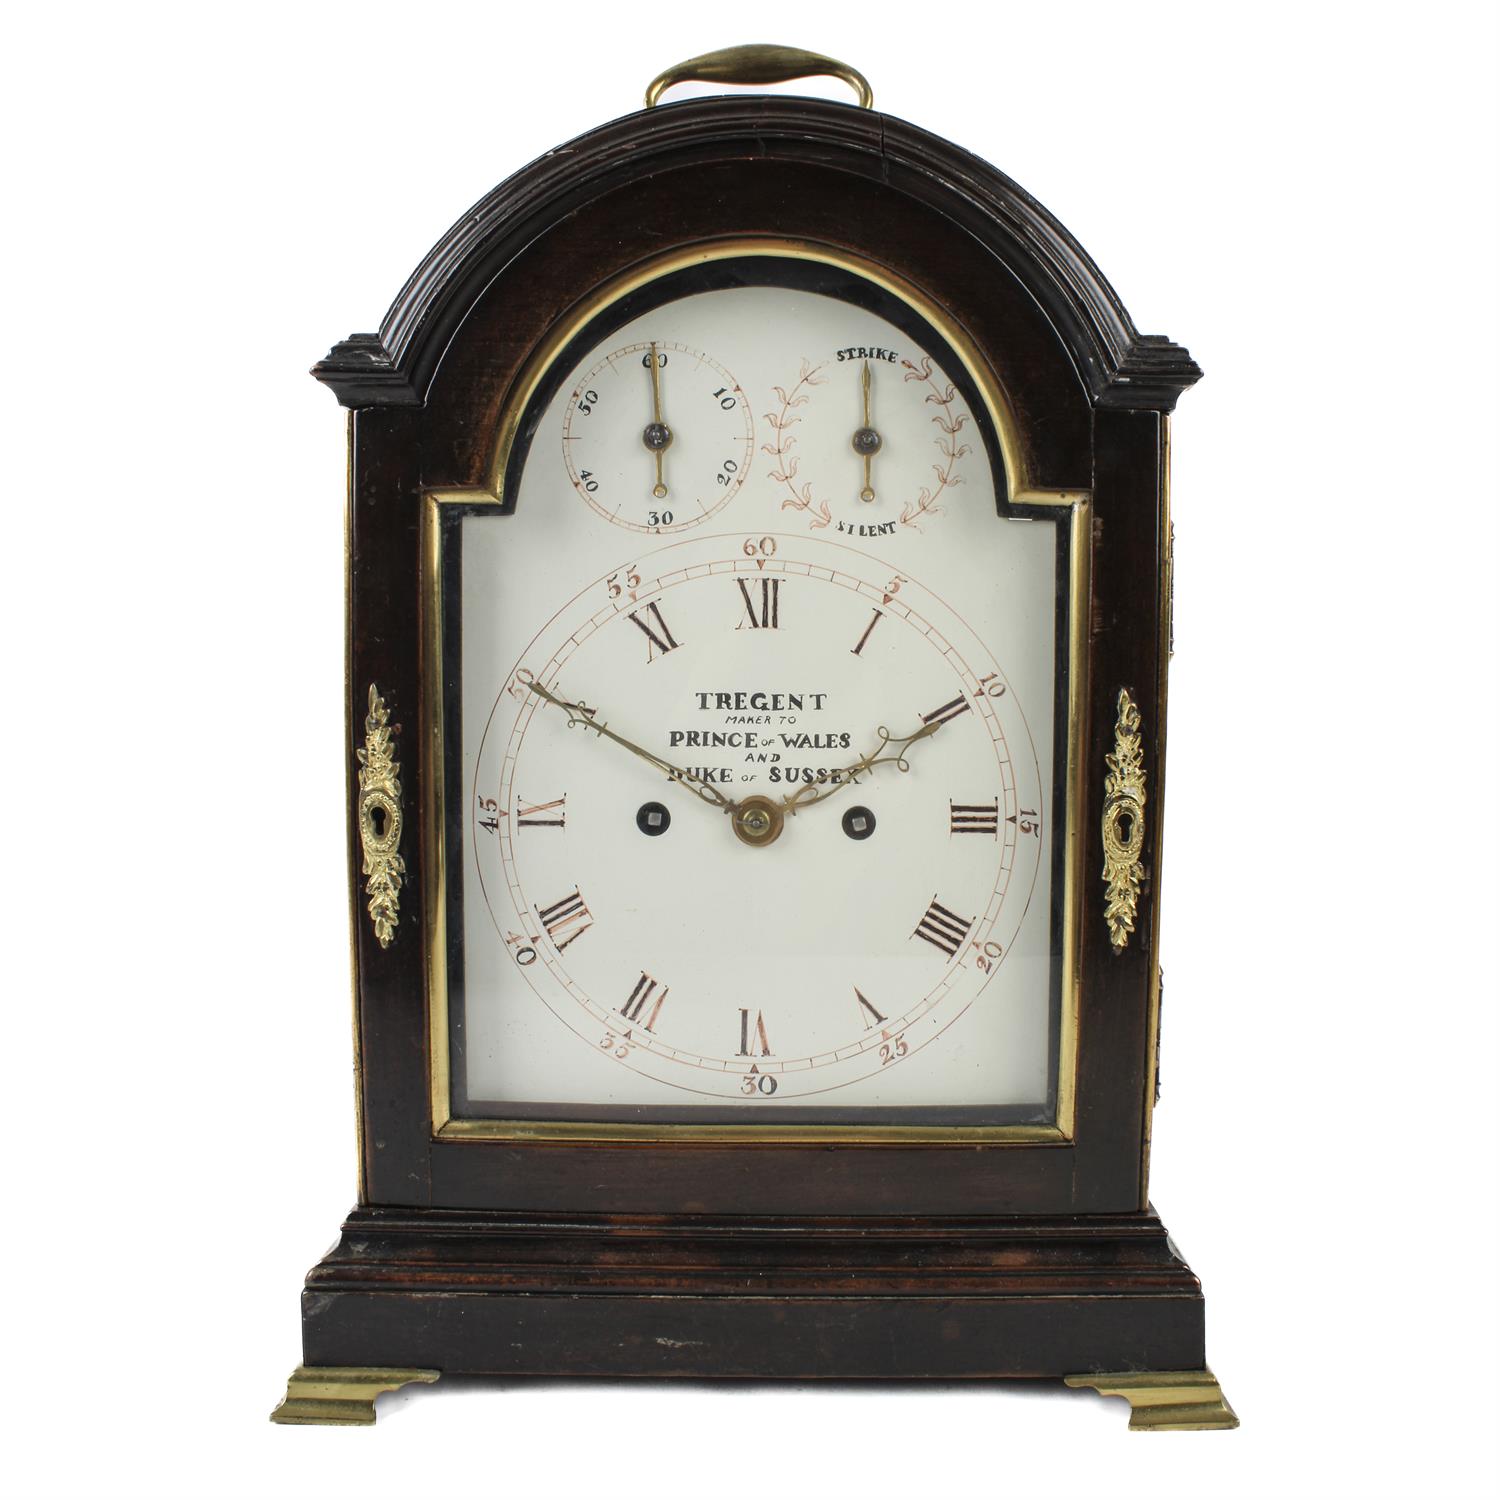 19th Century bracket clock marked Tregent